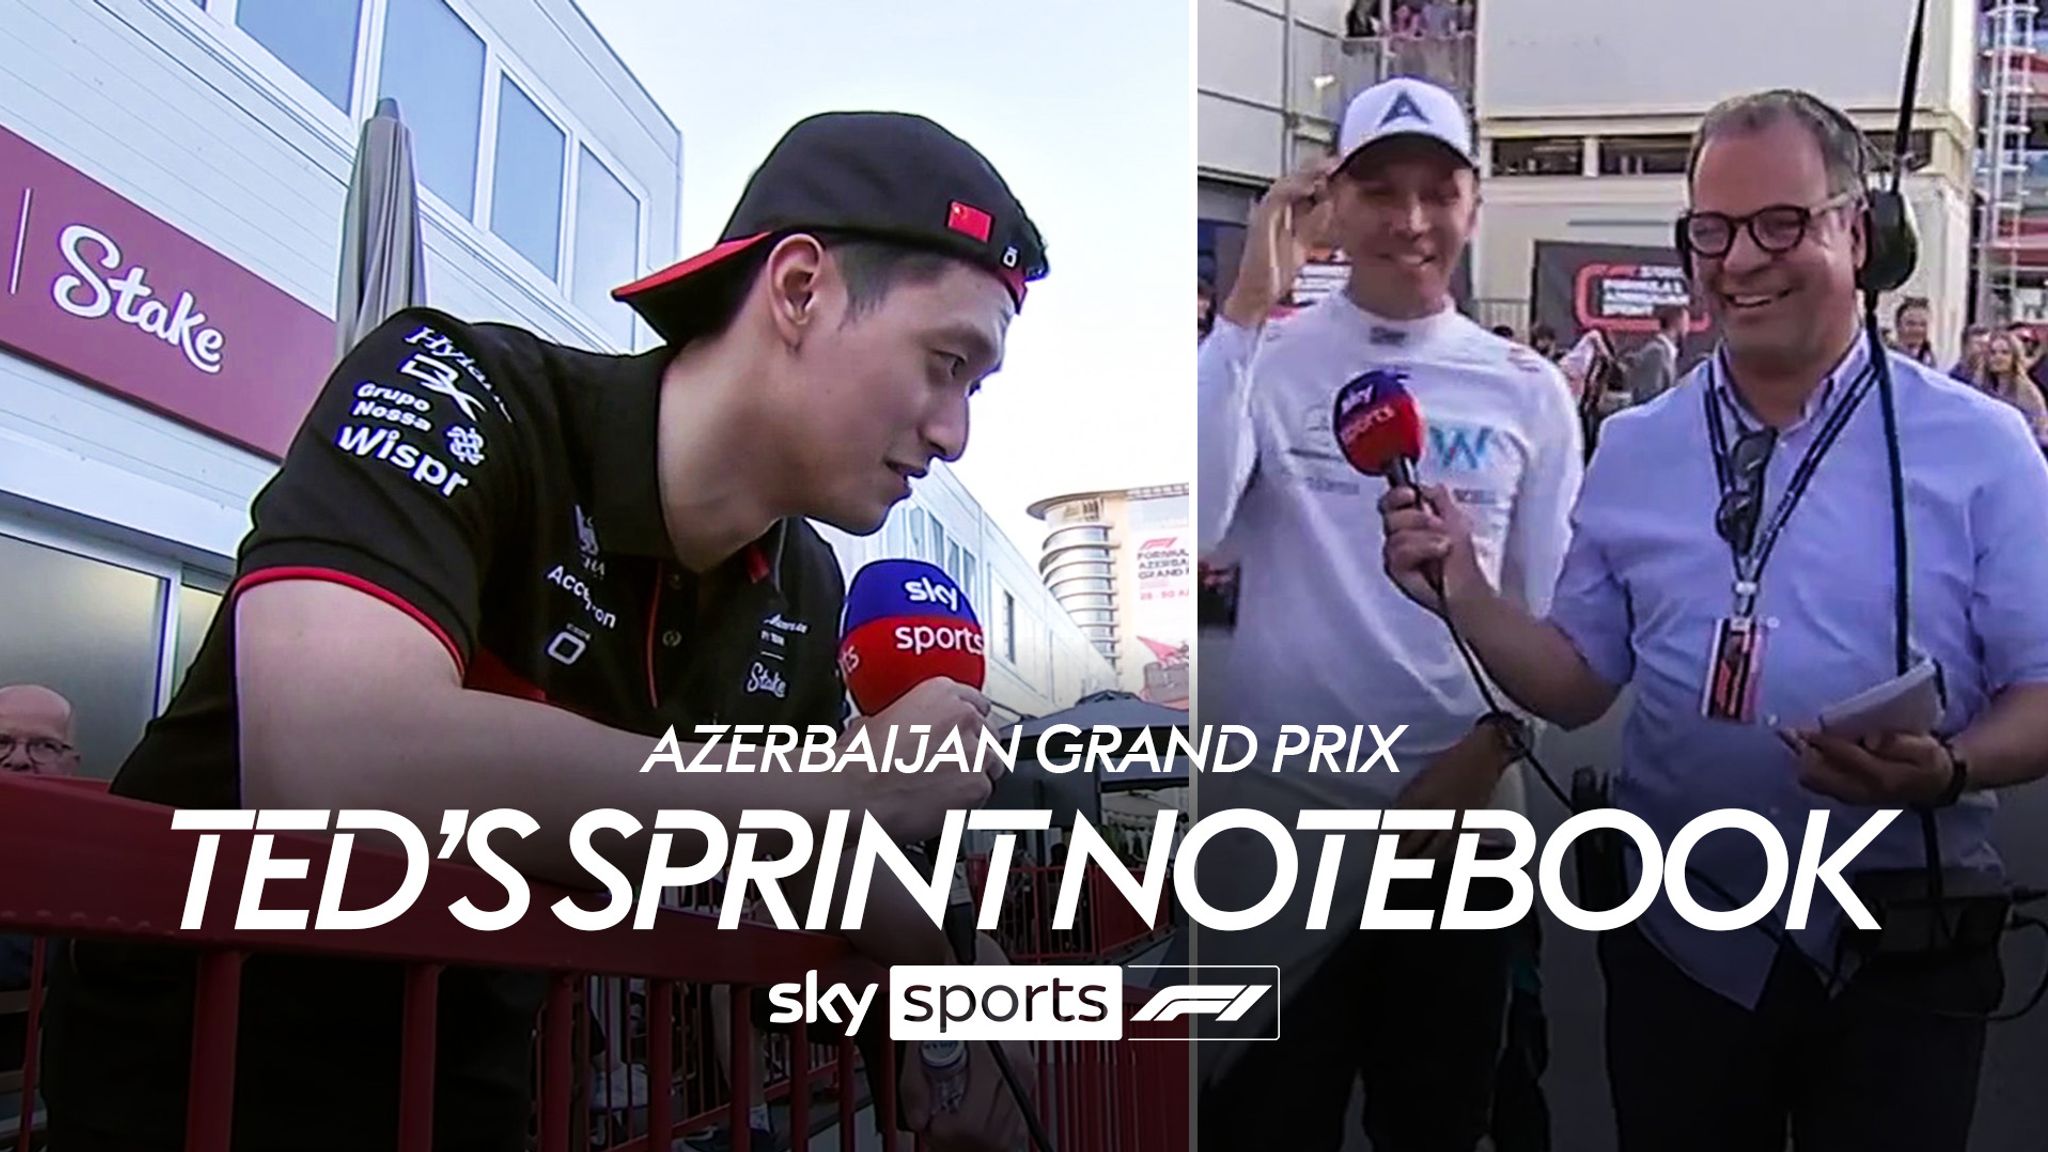 Teds Sprint Notebook Azerbaijan Grand Prix Video Watch TV Show Sky Sports